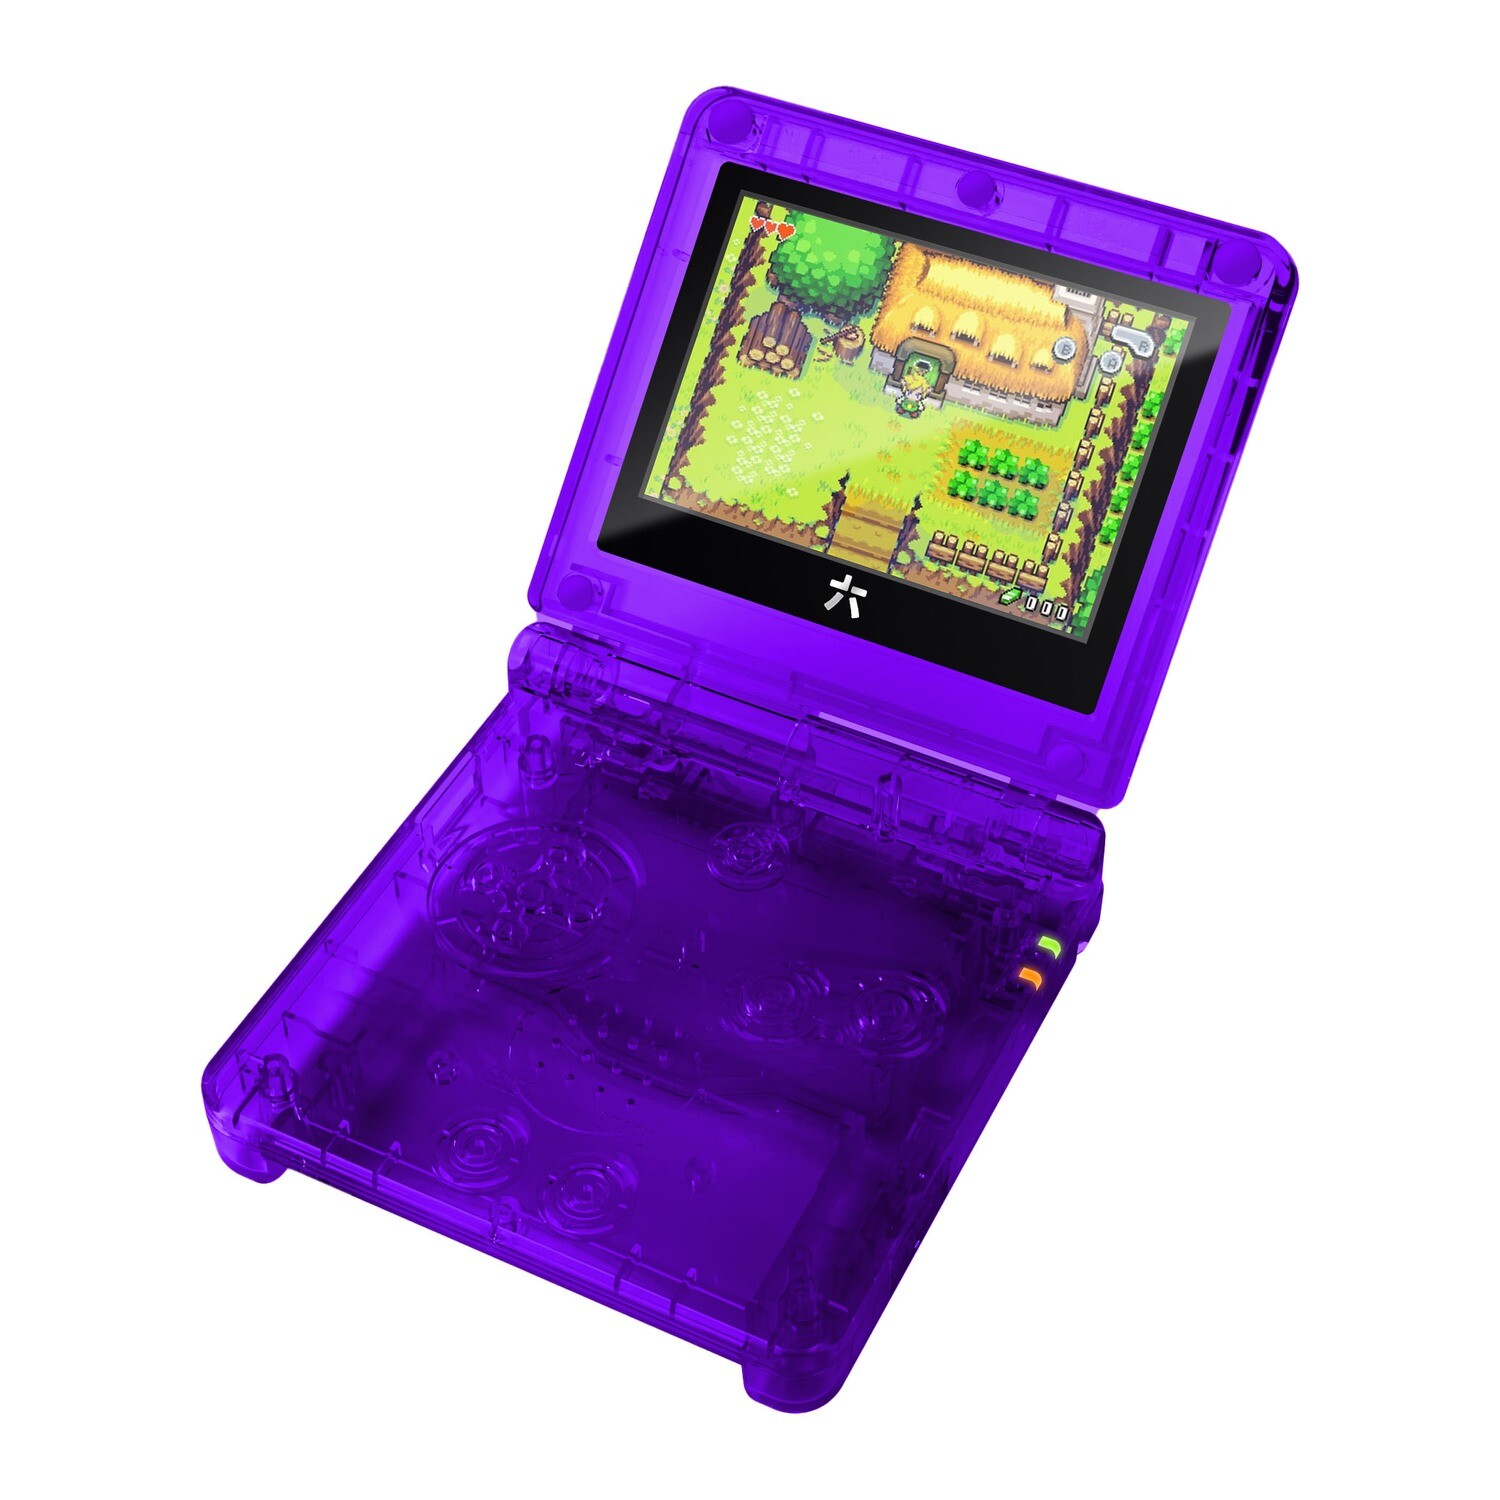 Game Boy Advance SP Console: Prestige Edition (Clear Purple)